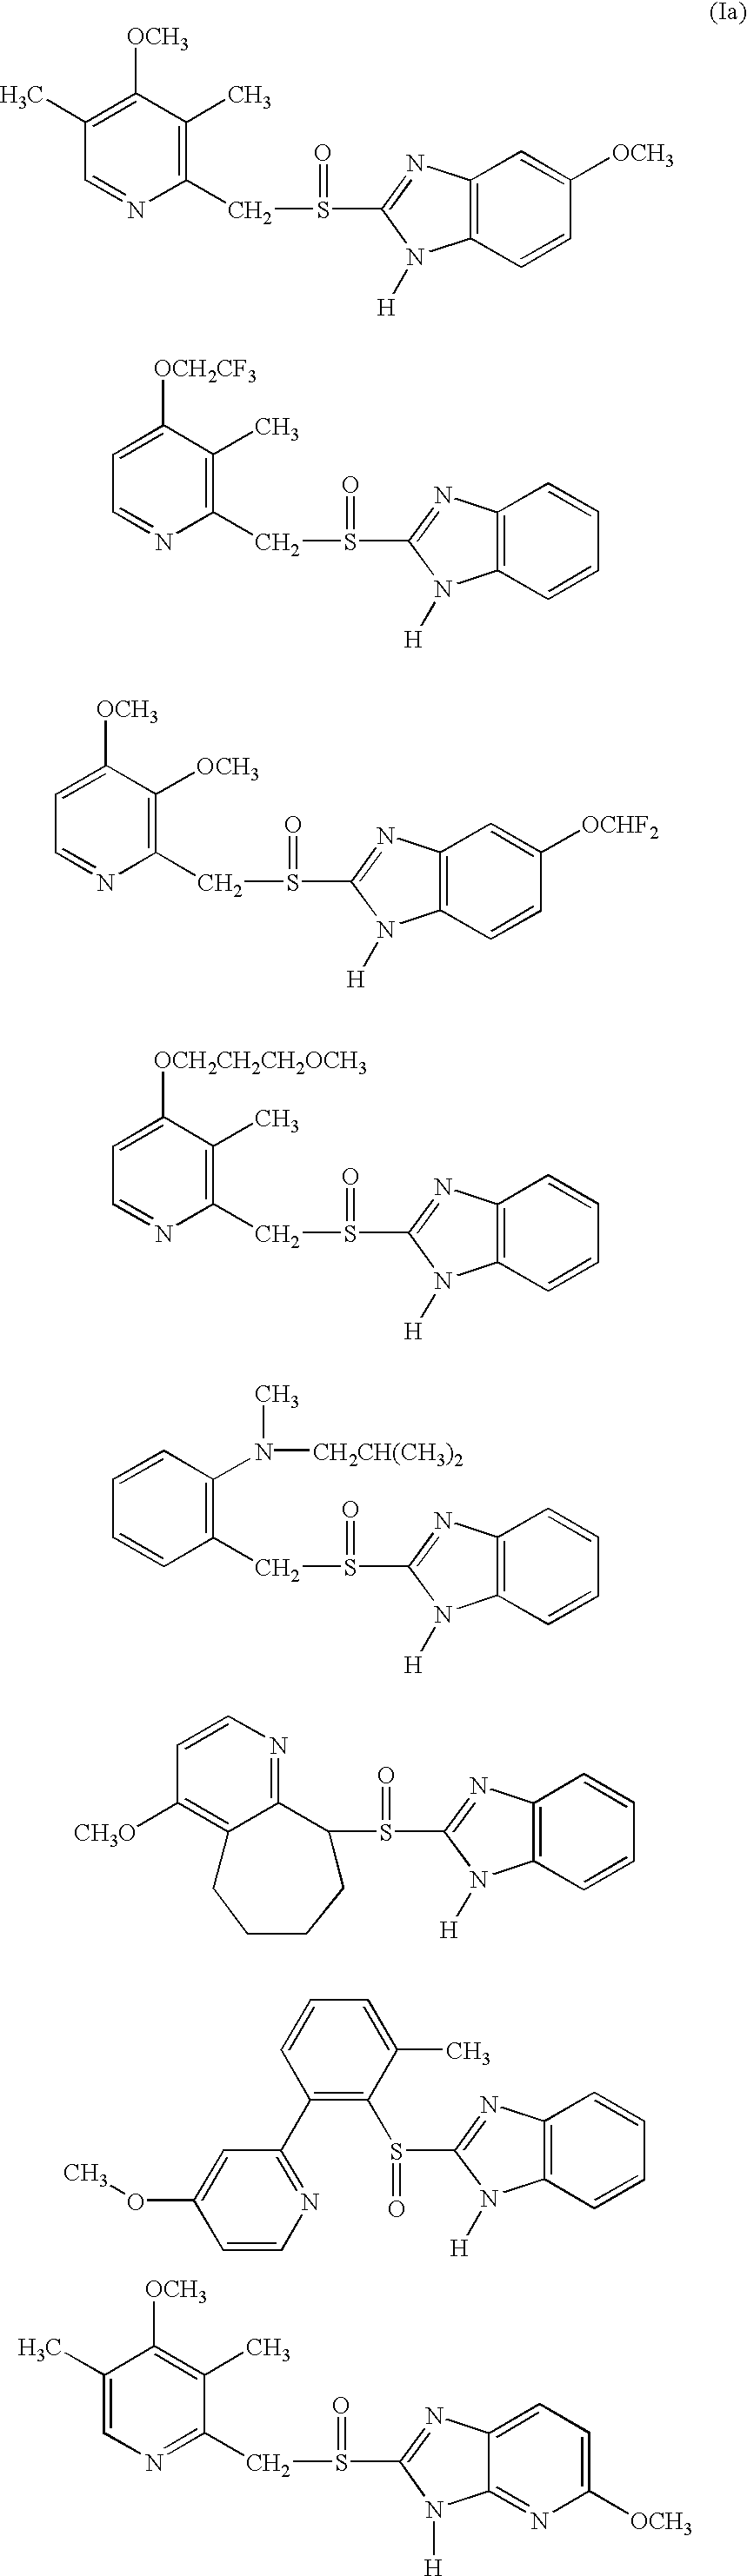 Formulation of substituted benzimidazoles